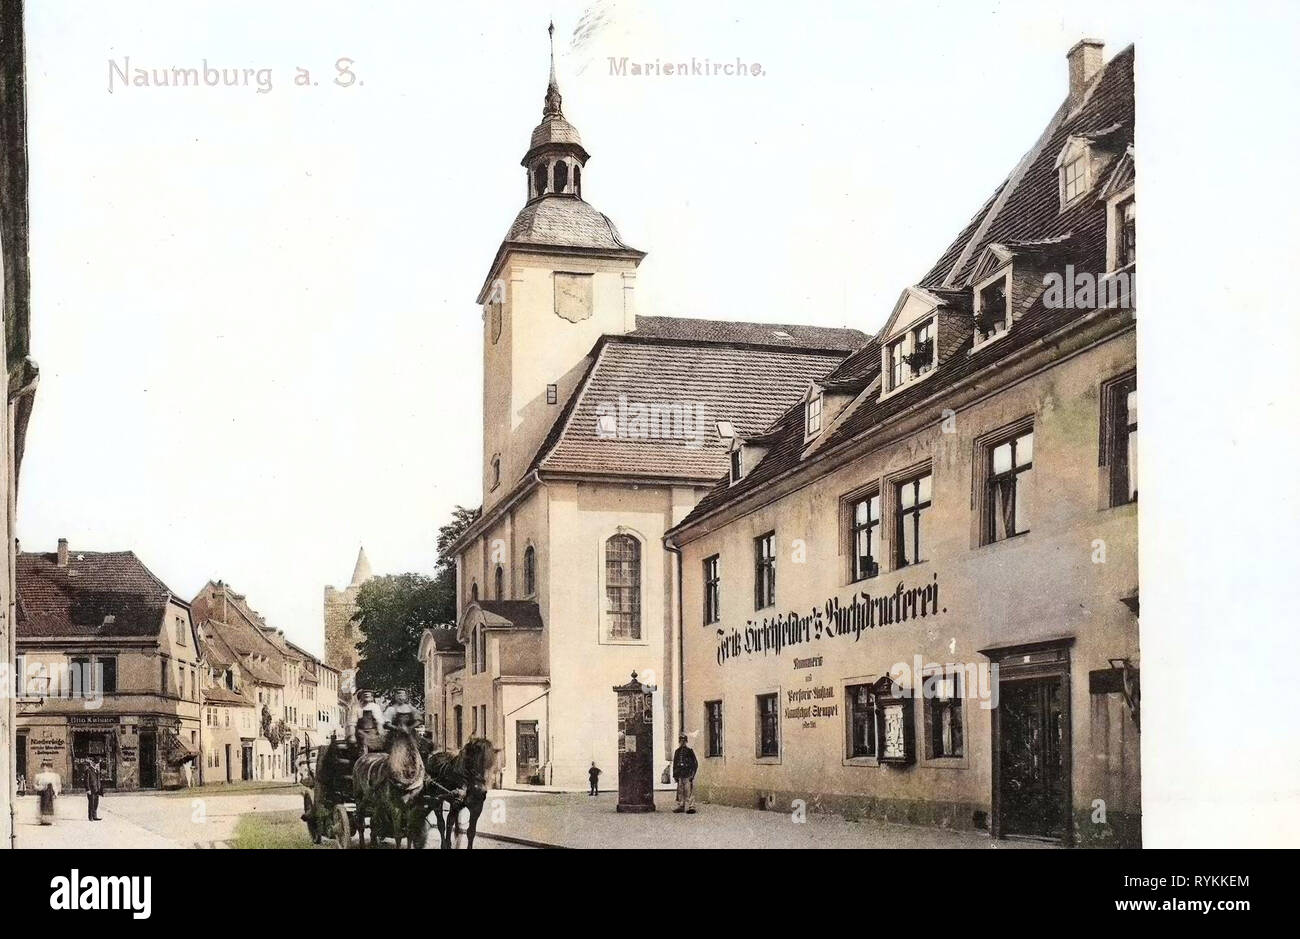 Horses of Saxony-Anhalt, Printing companies of Germany, Advertising columns in Saxony-Anhalt, Churches in Naumburg (Saale), 1903, Saxony-Anhalt, Naumburg, Marienkirche, Buchduckerei, Pferdefuhrwerk Stock Photo